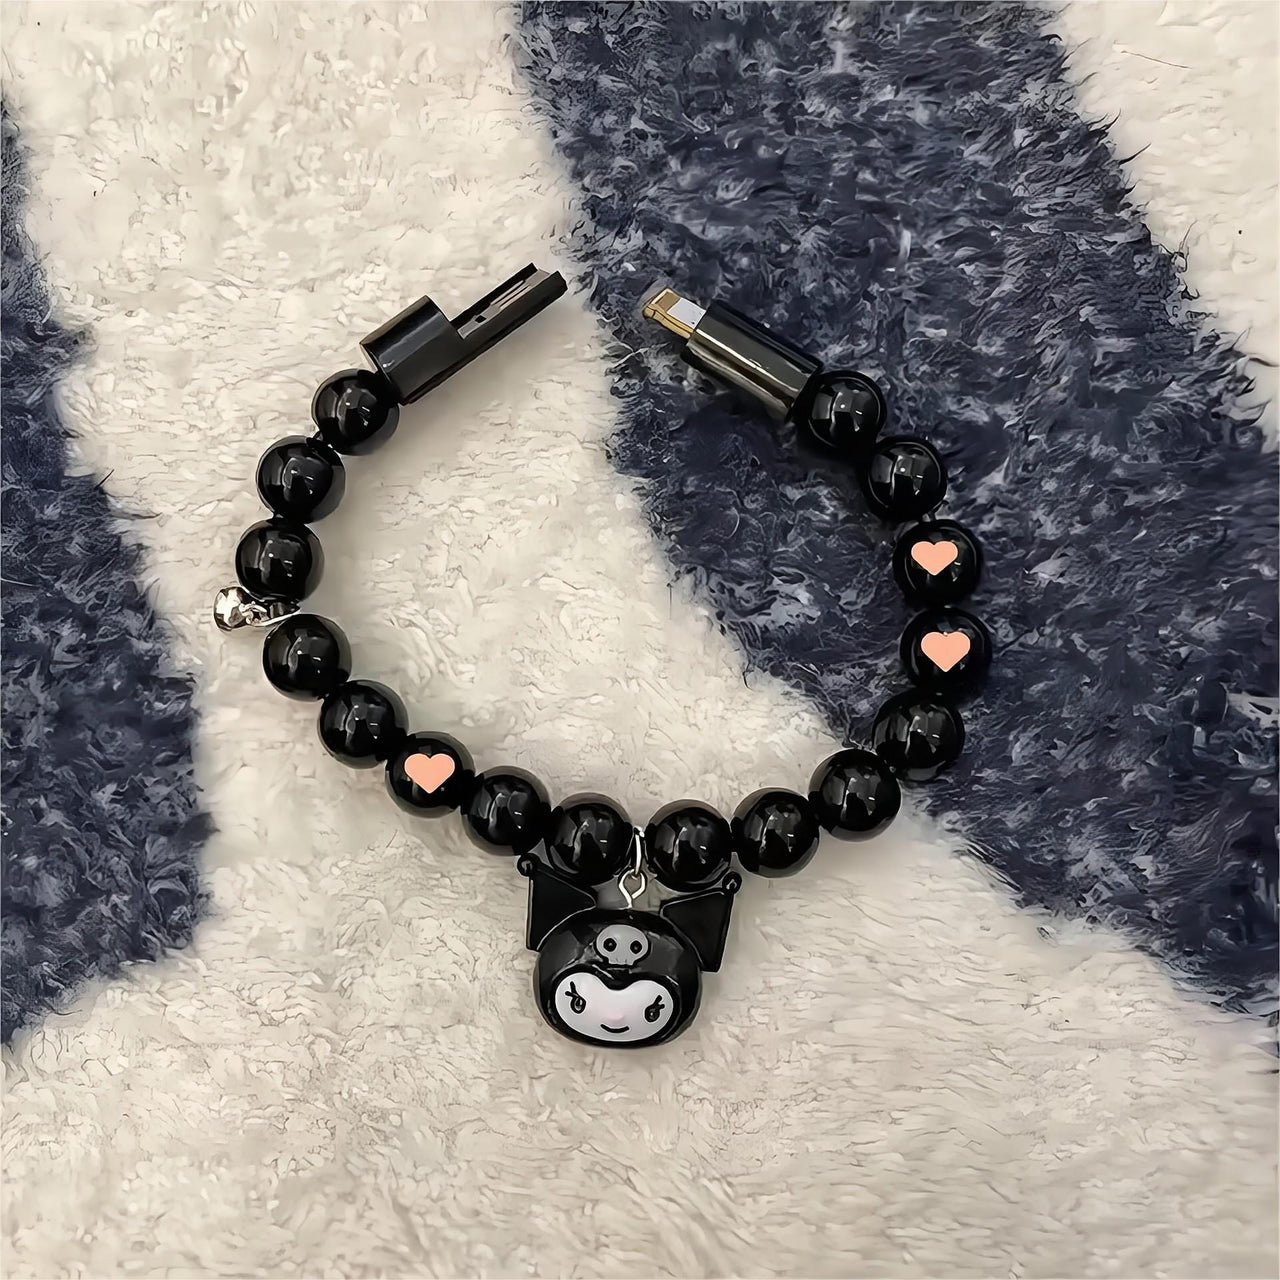 Panda Bracelet/ Panda Gifts/ Panda Charm/ Personalized/gifts for  Girls/stretchy/ Easter Gifts/ Handmade Beaded Jewelry - Etsy | Handmade  bracelets, Girl bracelets, Beaded jewelry